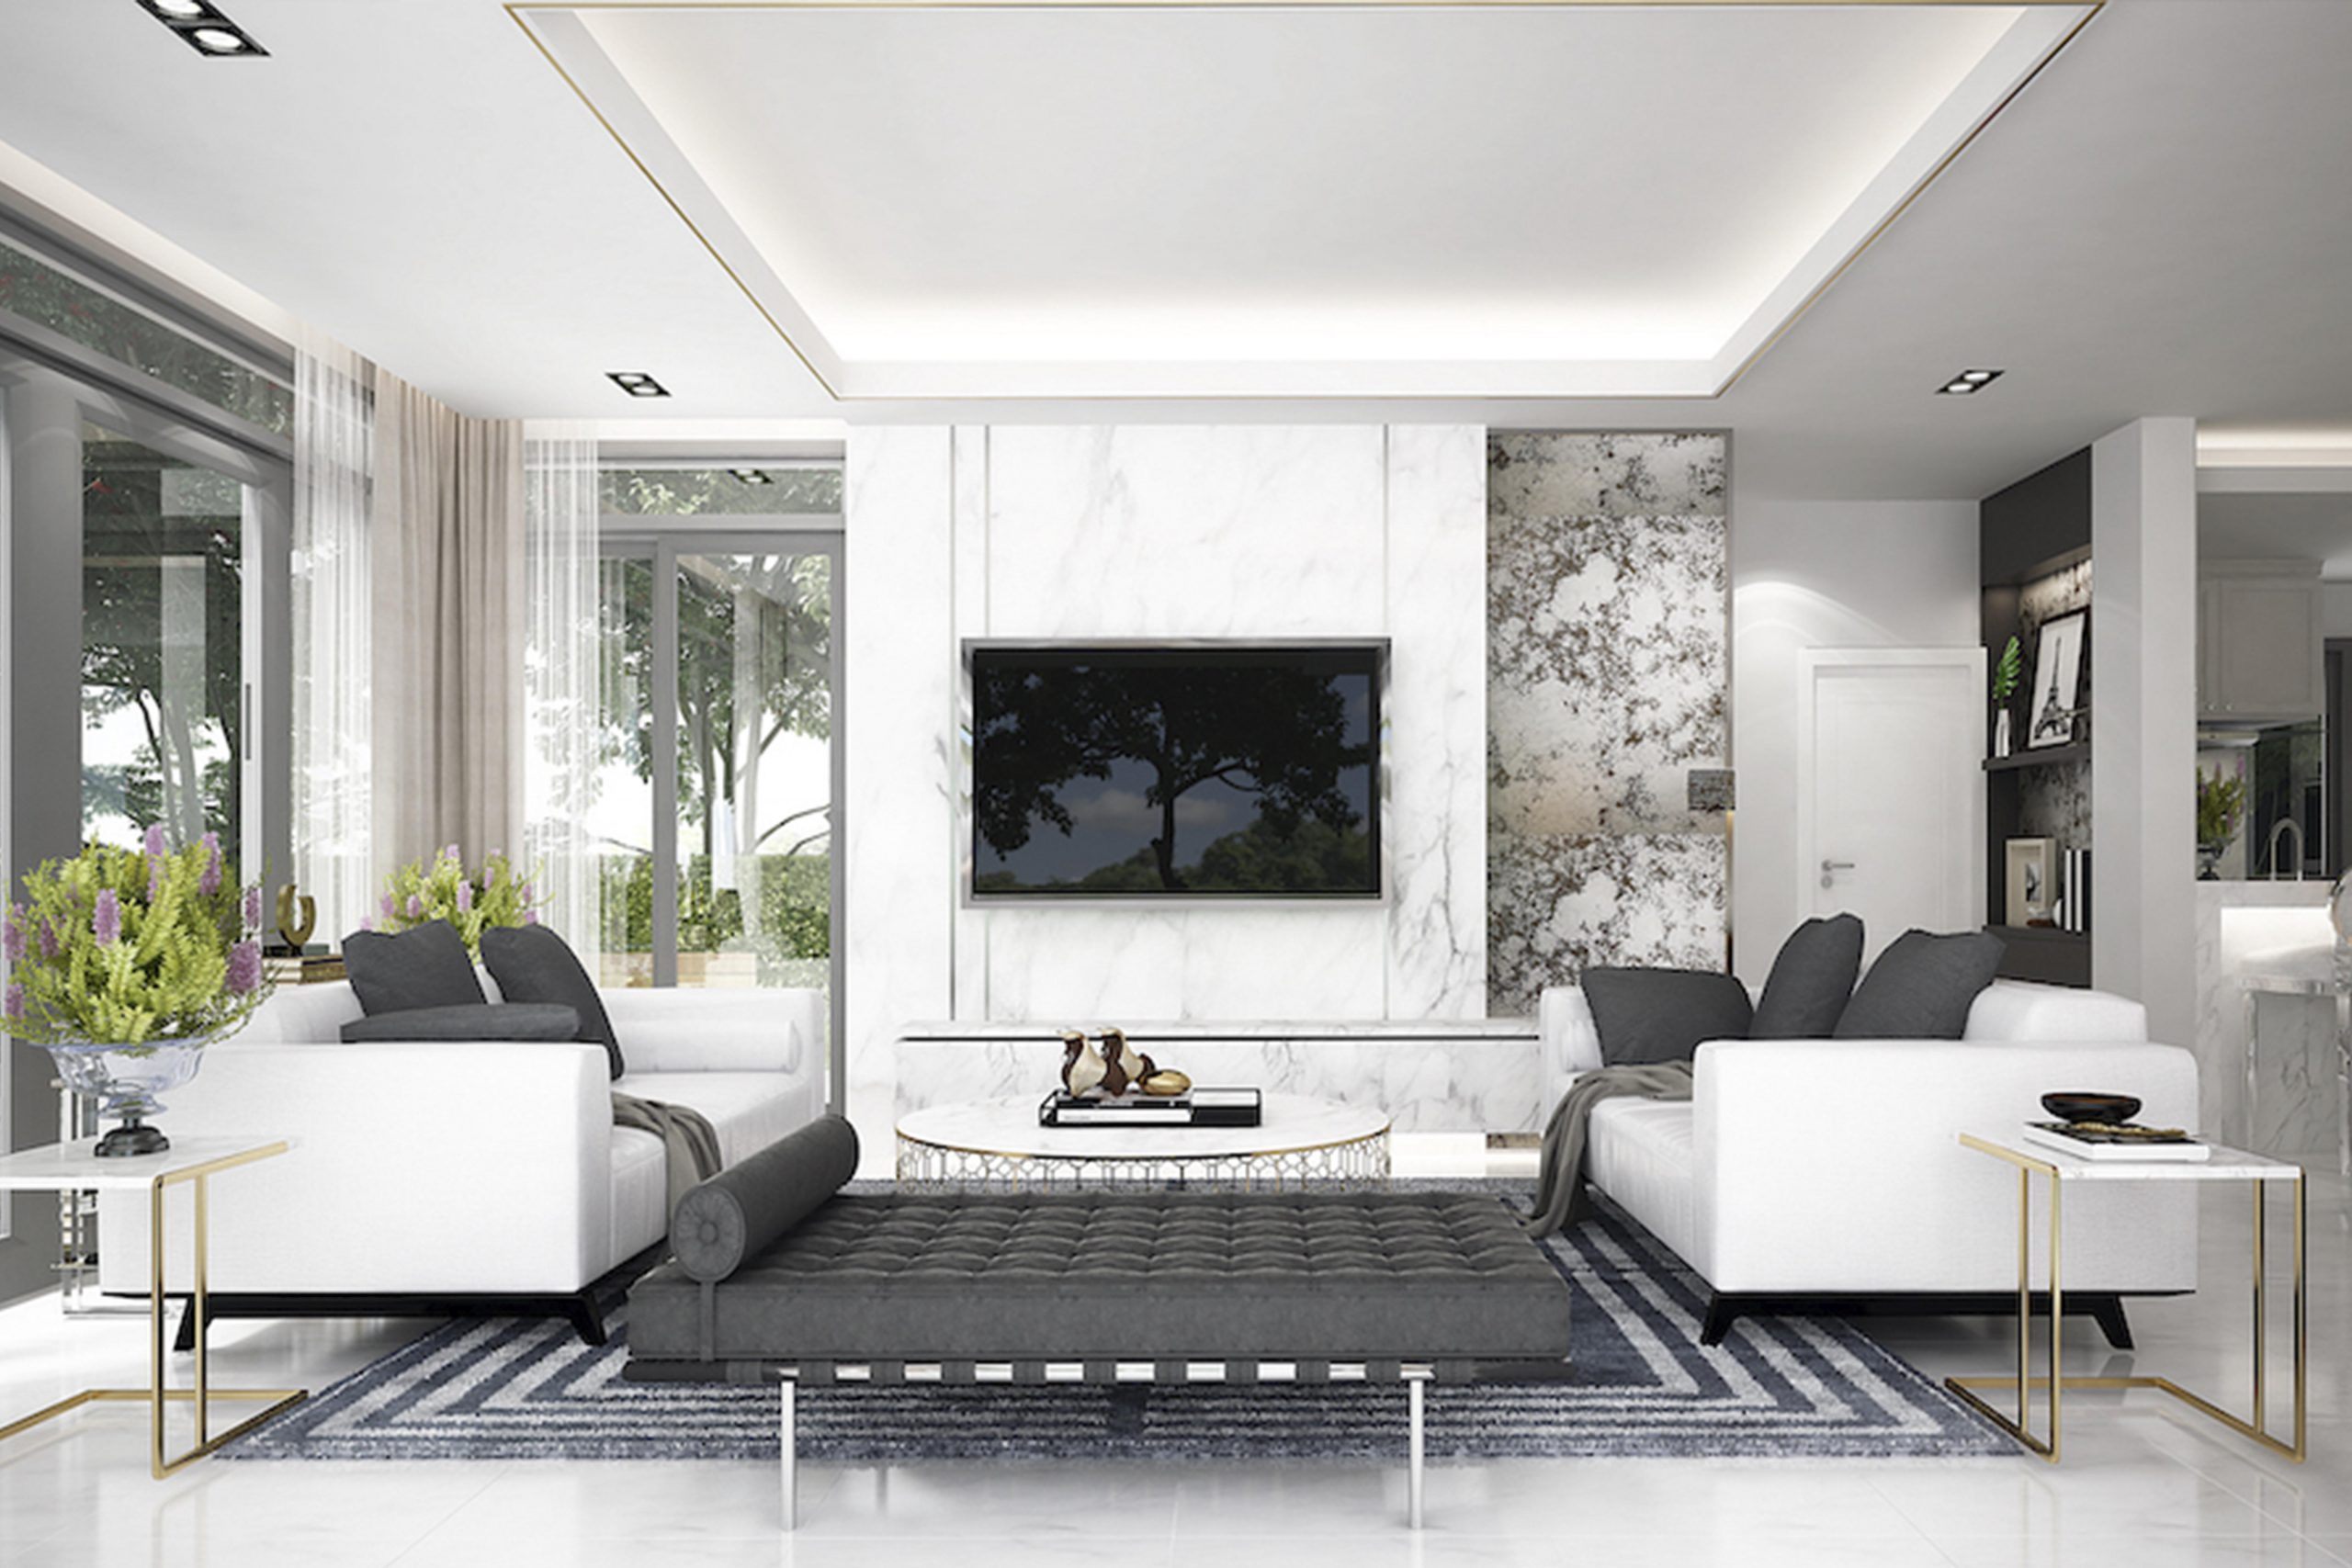 Luxury modern villa interior design on Behance | Luxury interior design,  Luxury house interior design, Modern home interior design